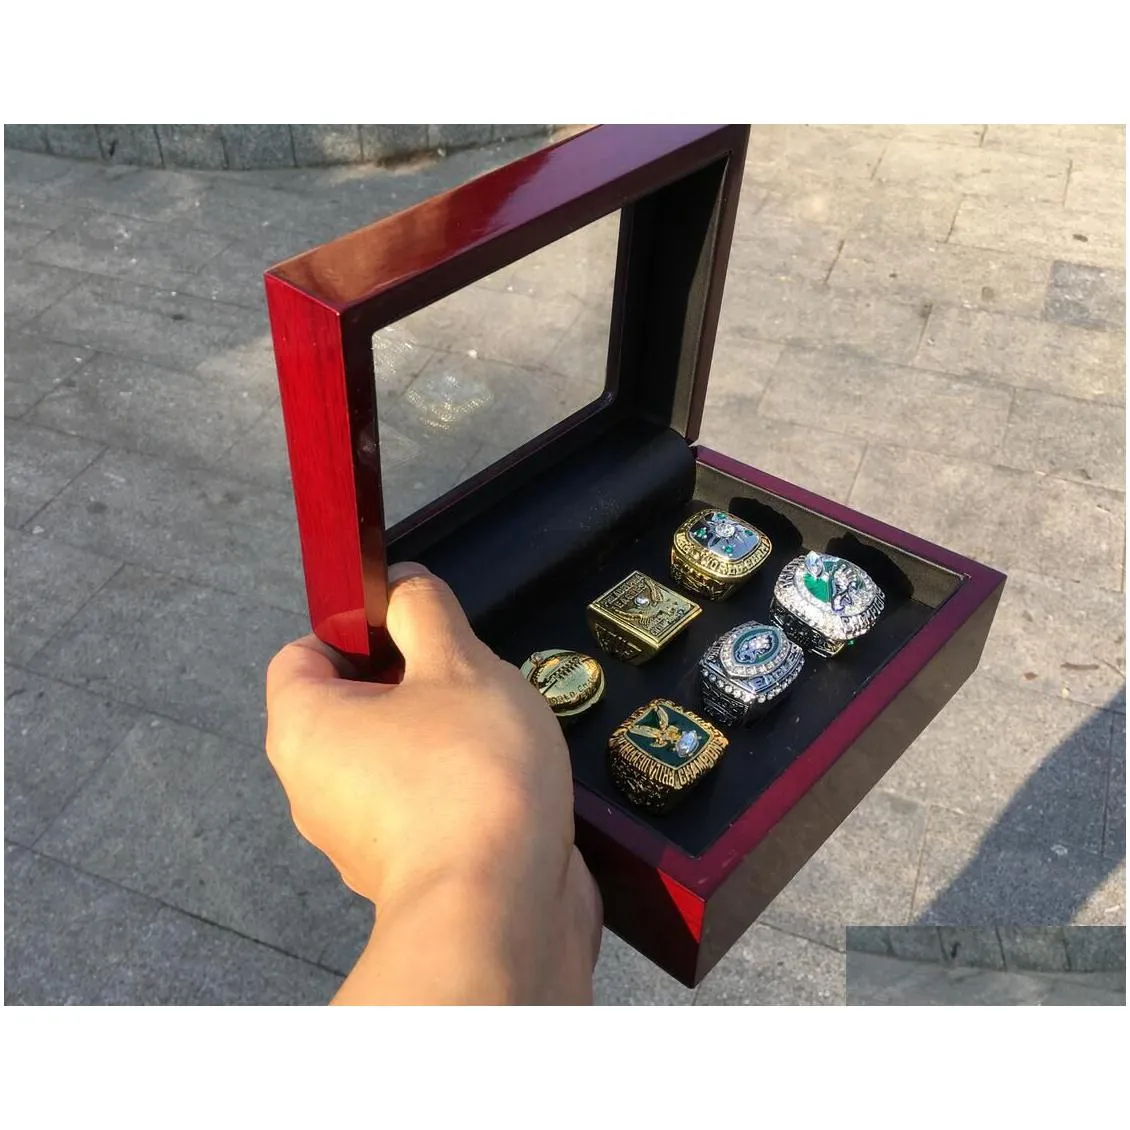 philadelphia 6pcs  american football team champions championship ring set with wooden box souvenir men fan gift 2019